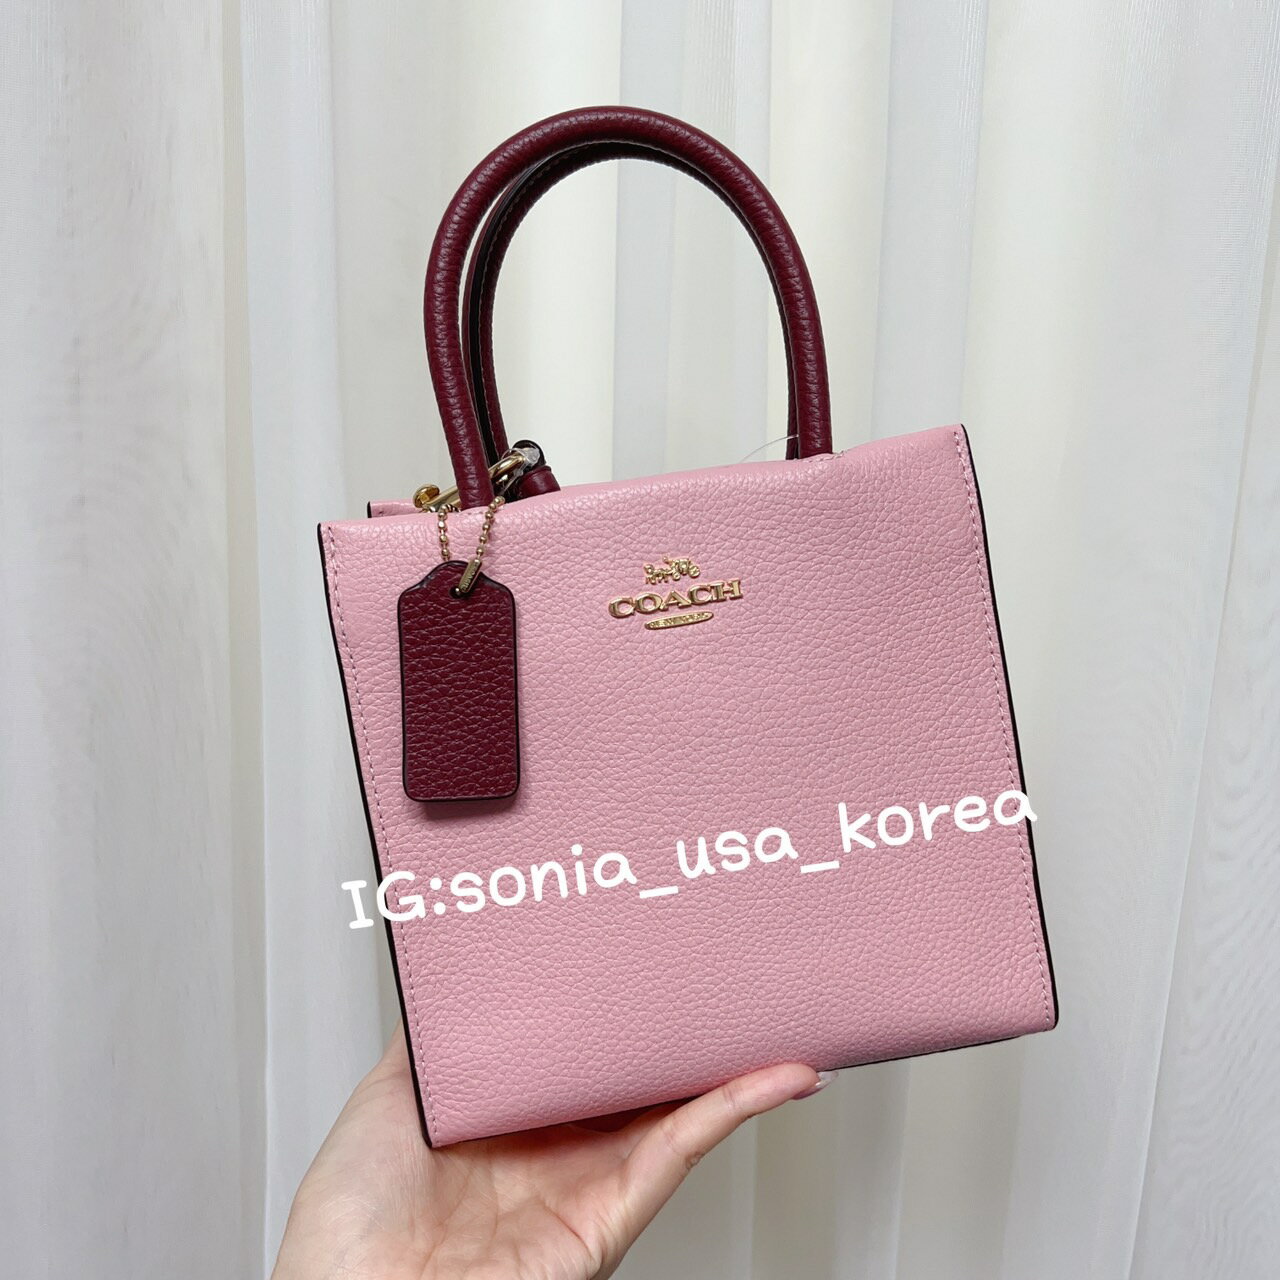 🌈sonia_usa_korea- Coach 粉色紙袋包